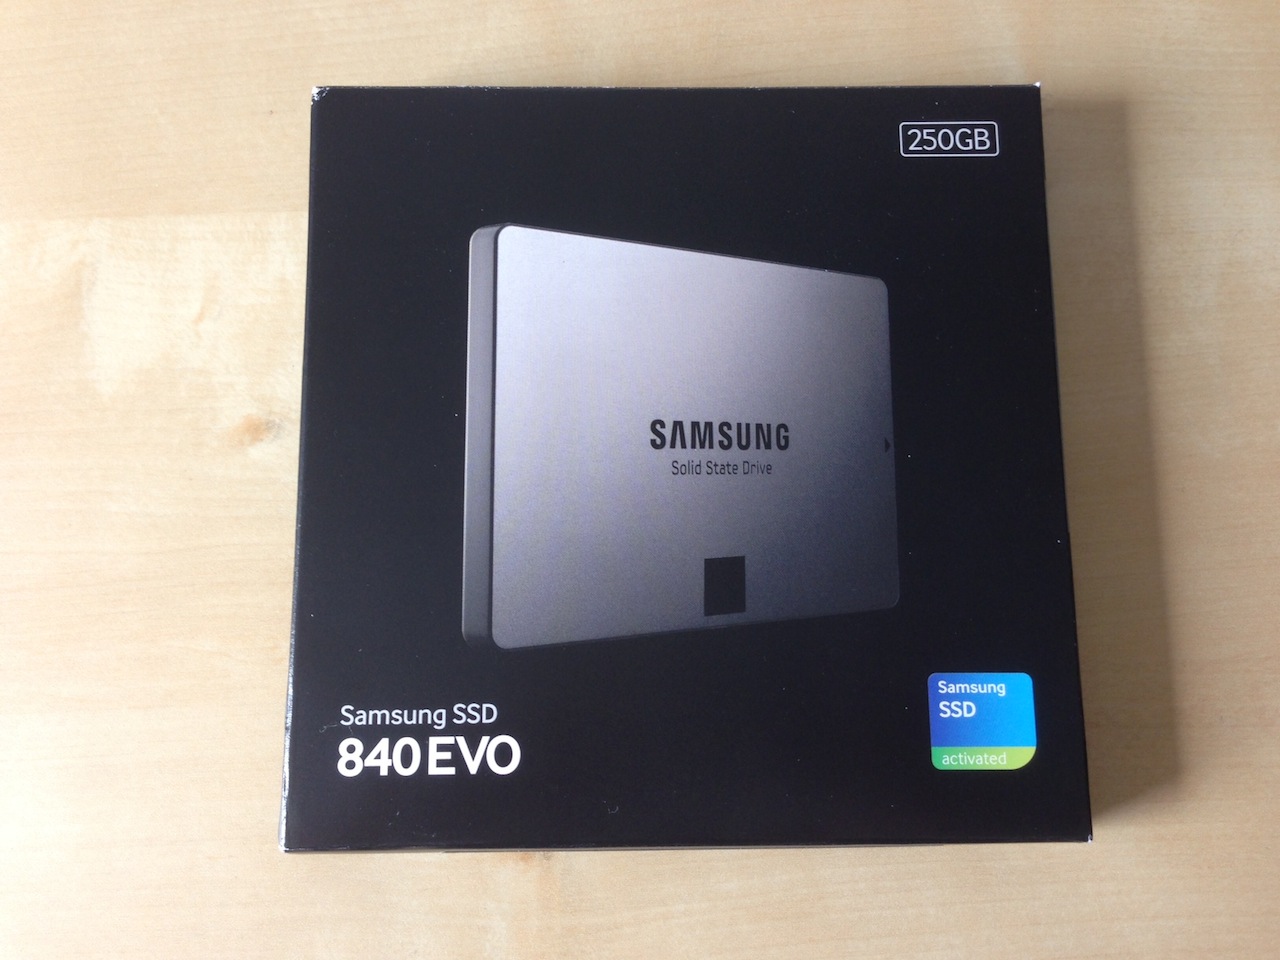 [Image: Samsung-SSD-840-EVO-Box-250GB.jpg]